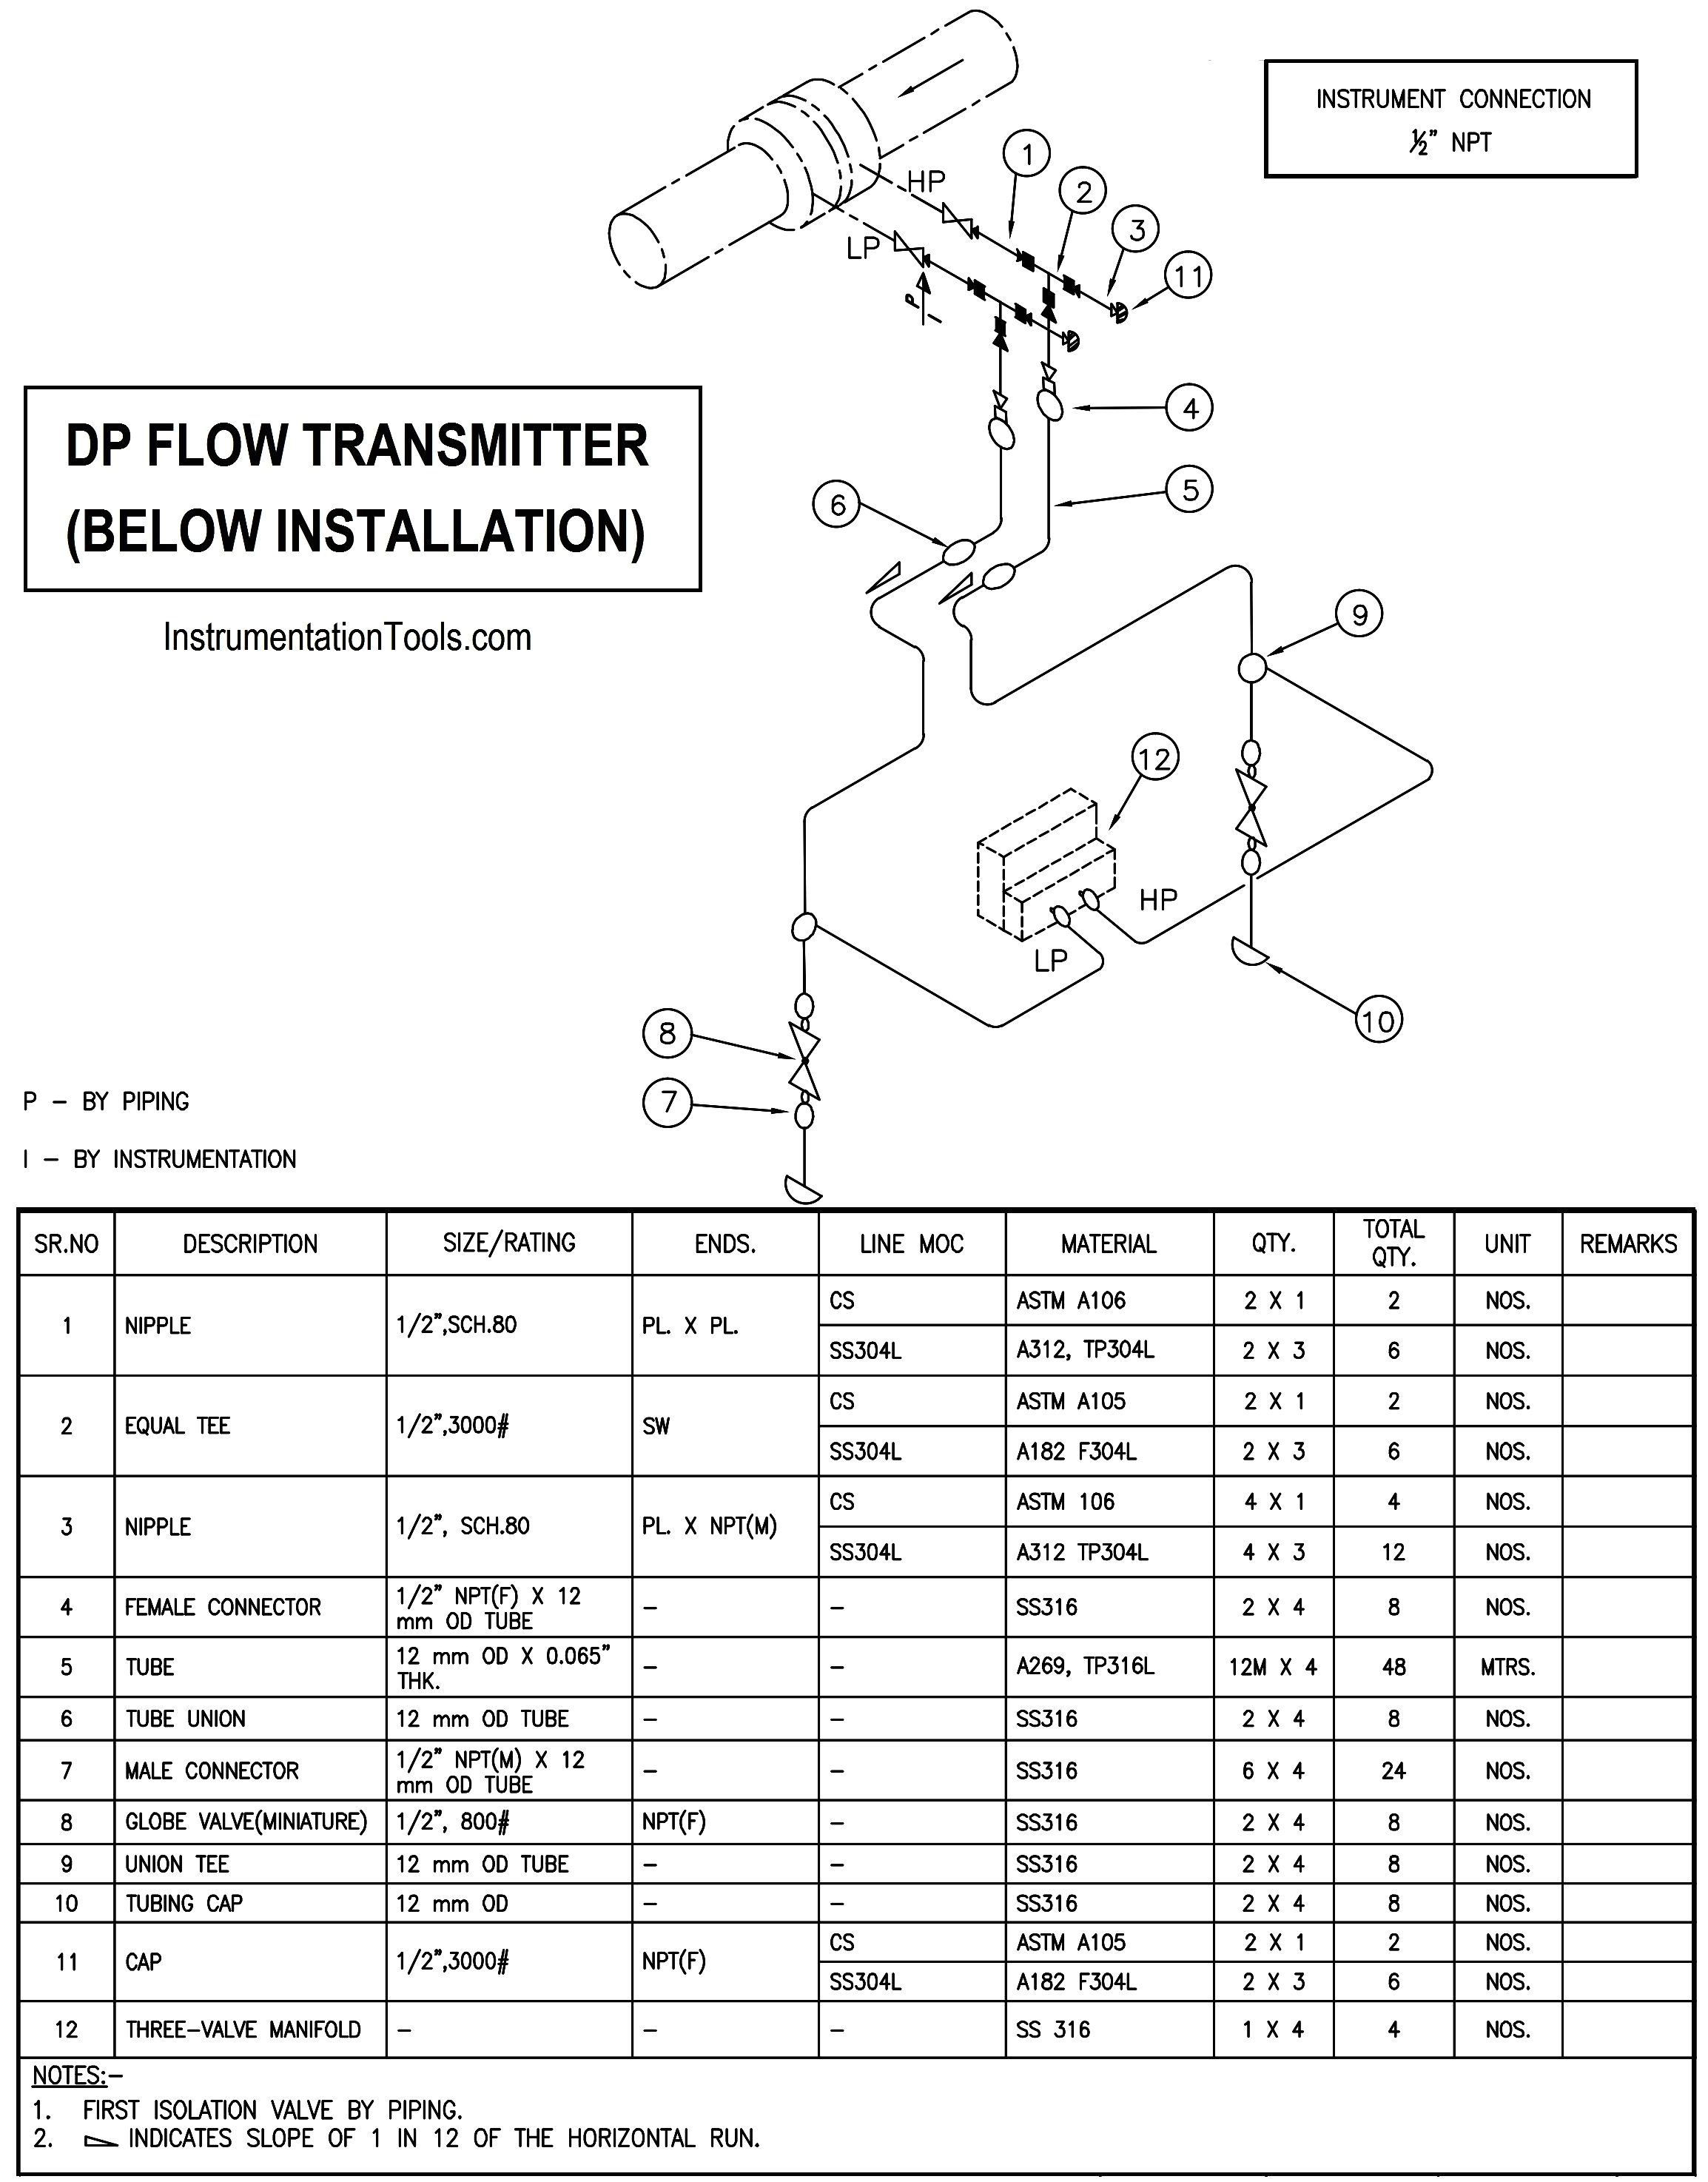 instrument hook up diagram for differential pressure transmitter